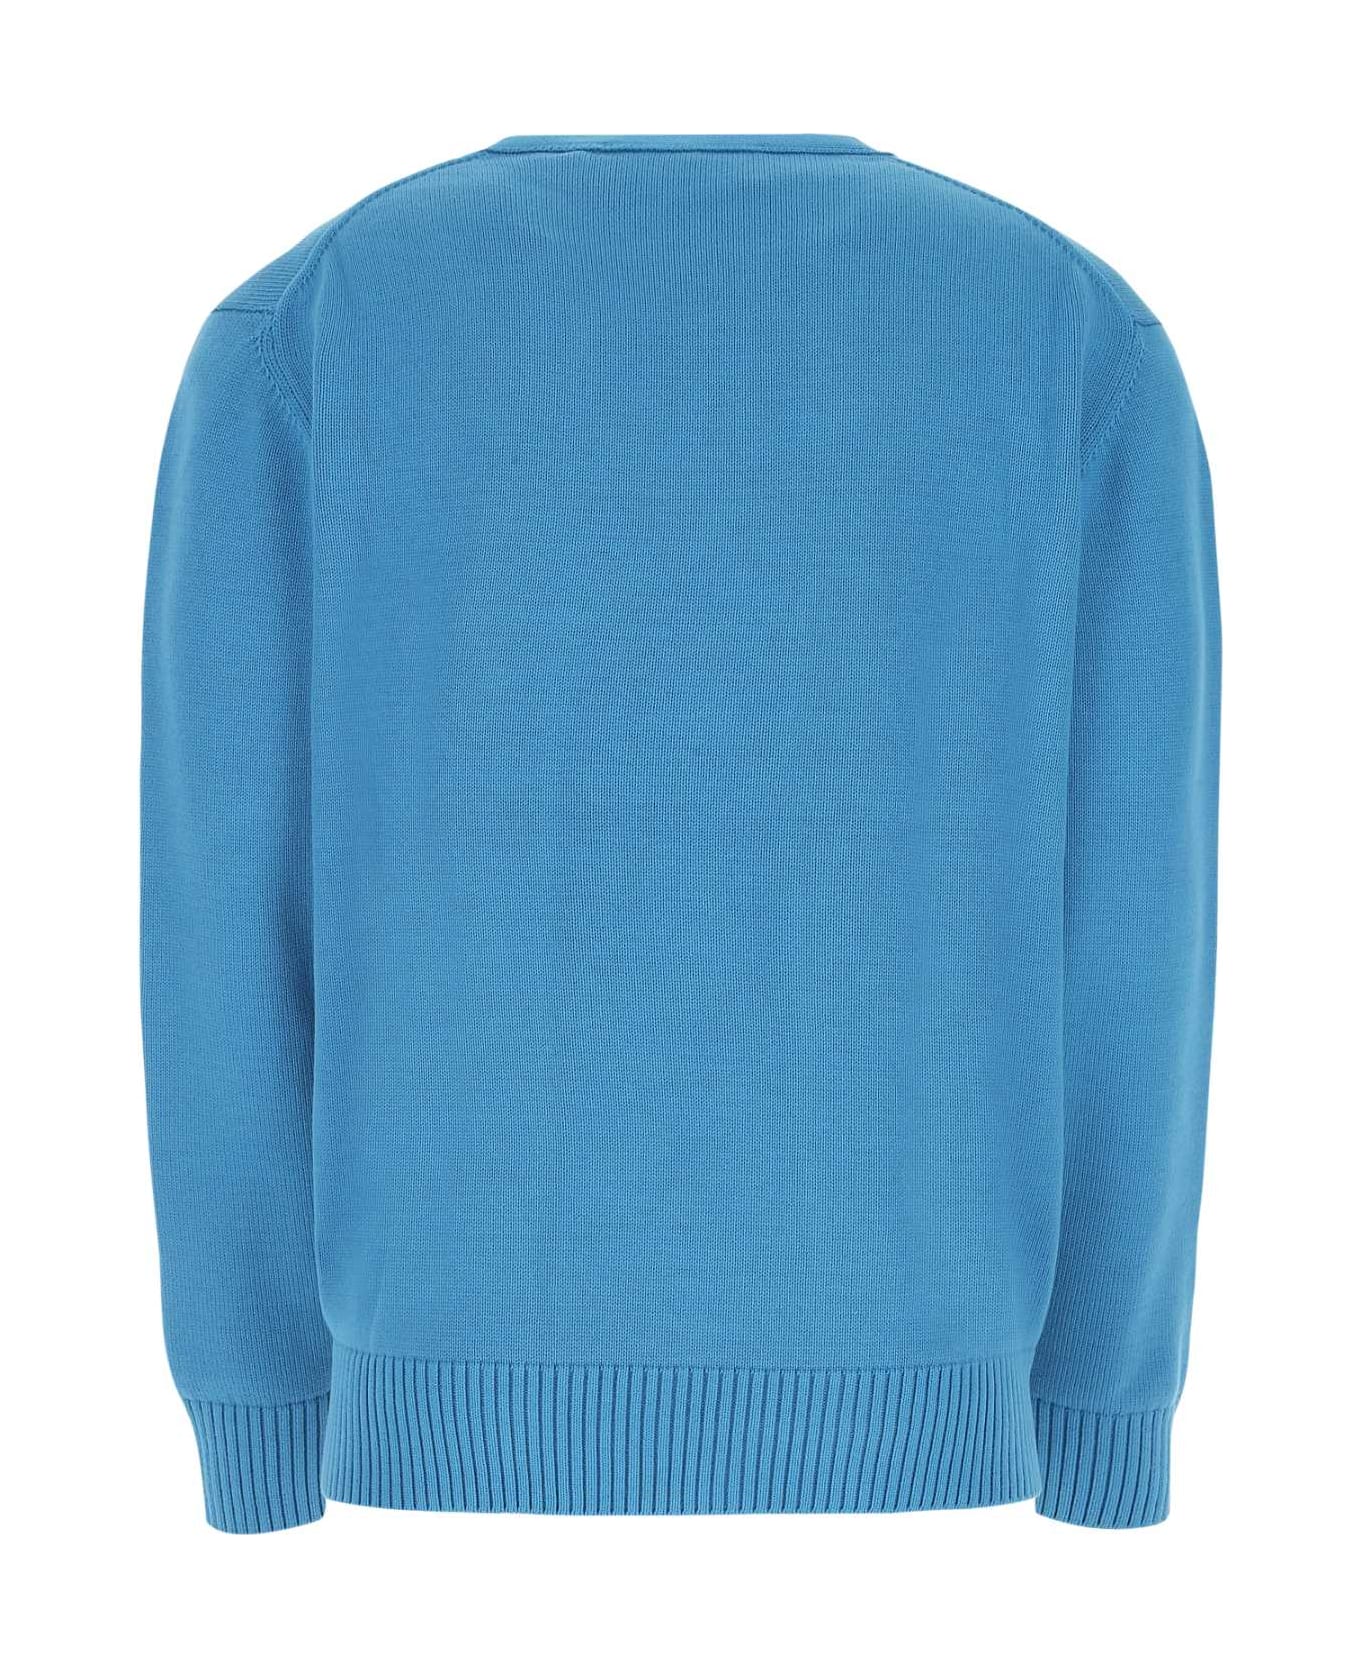 1017 ALYX 9SM Turquoise Cotton Sweater - BLU0001